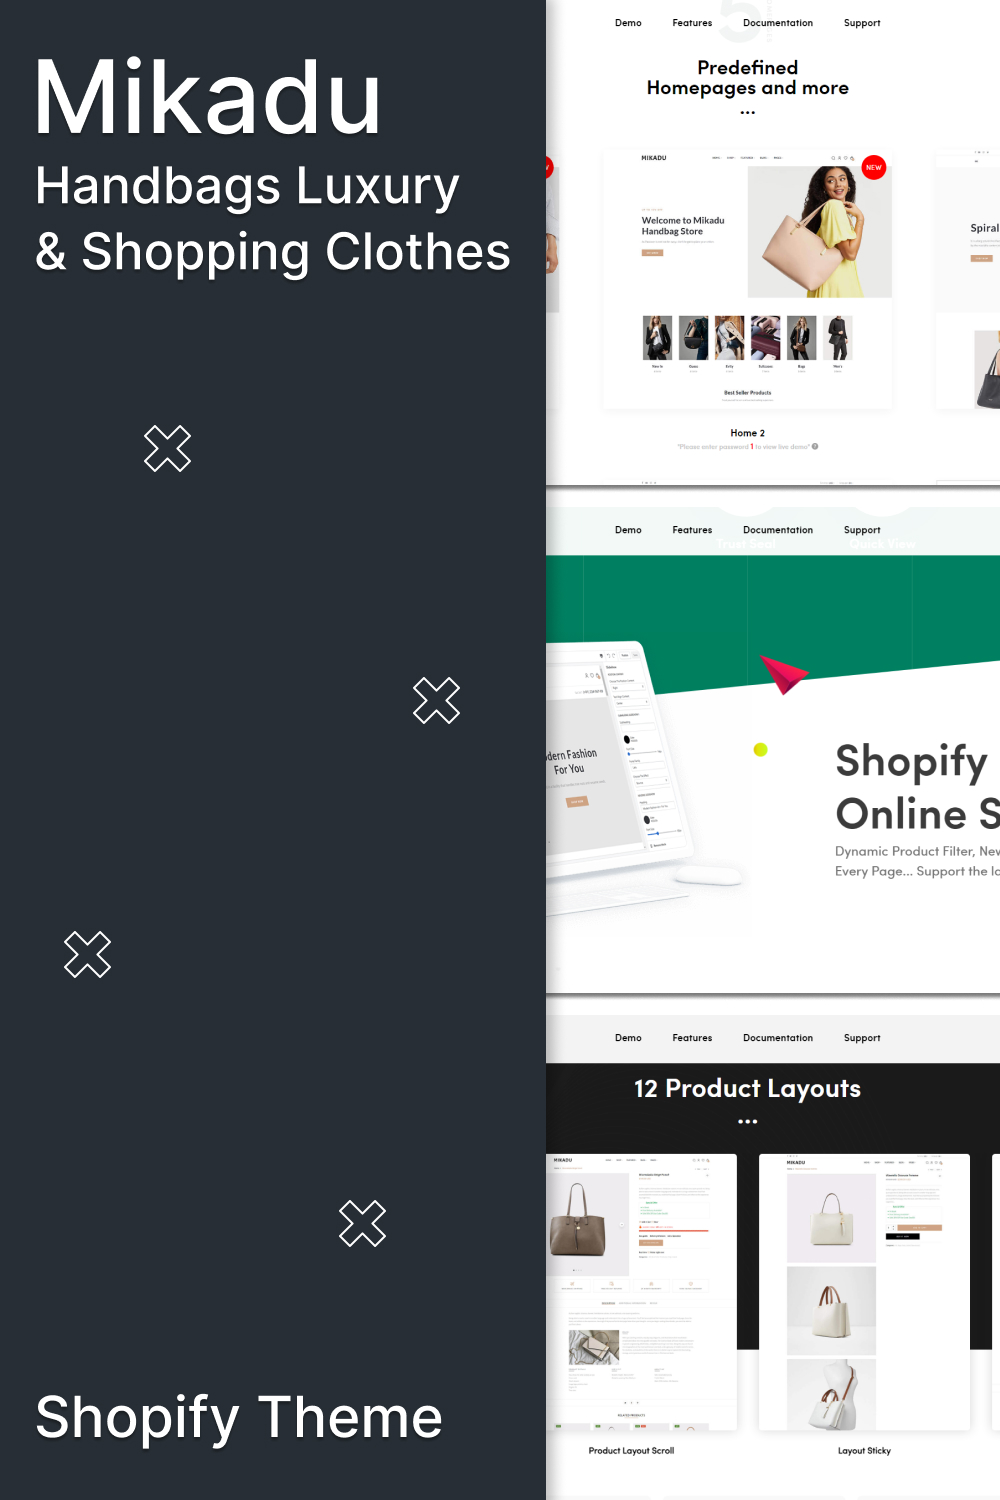 Mikadu - Handbags Luxury & Shopping Clothes Shopify Theme - Pinterest.